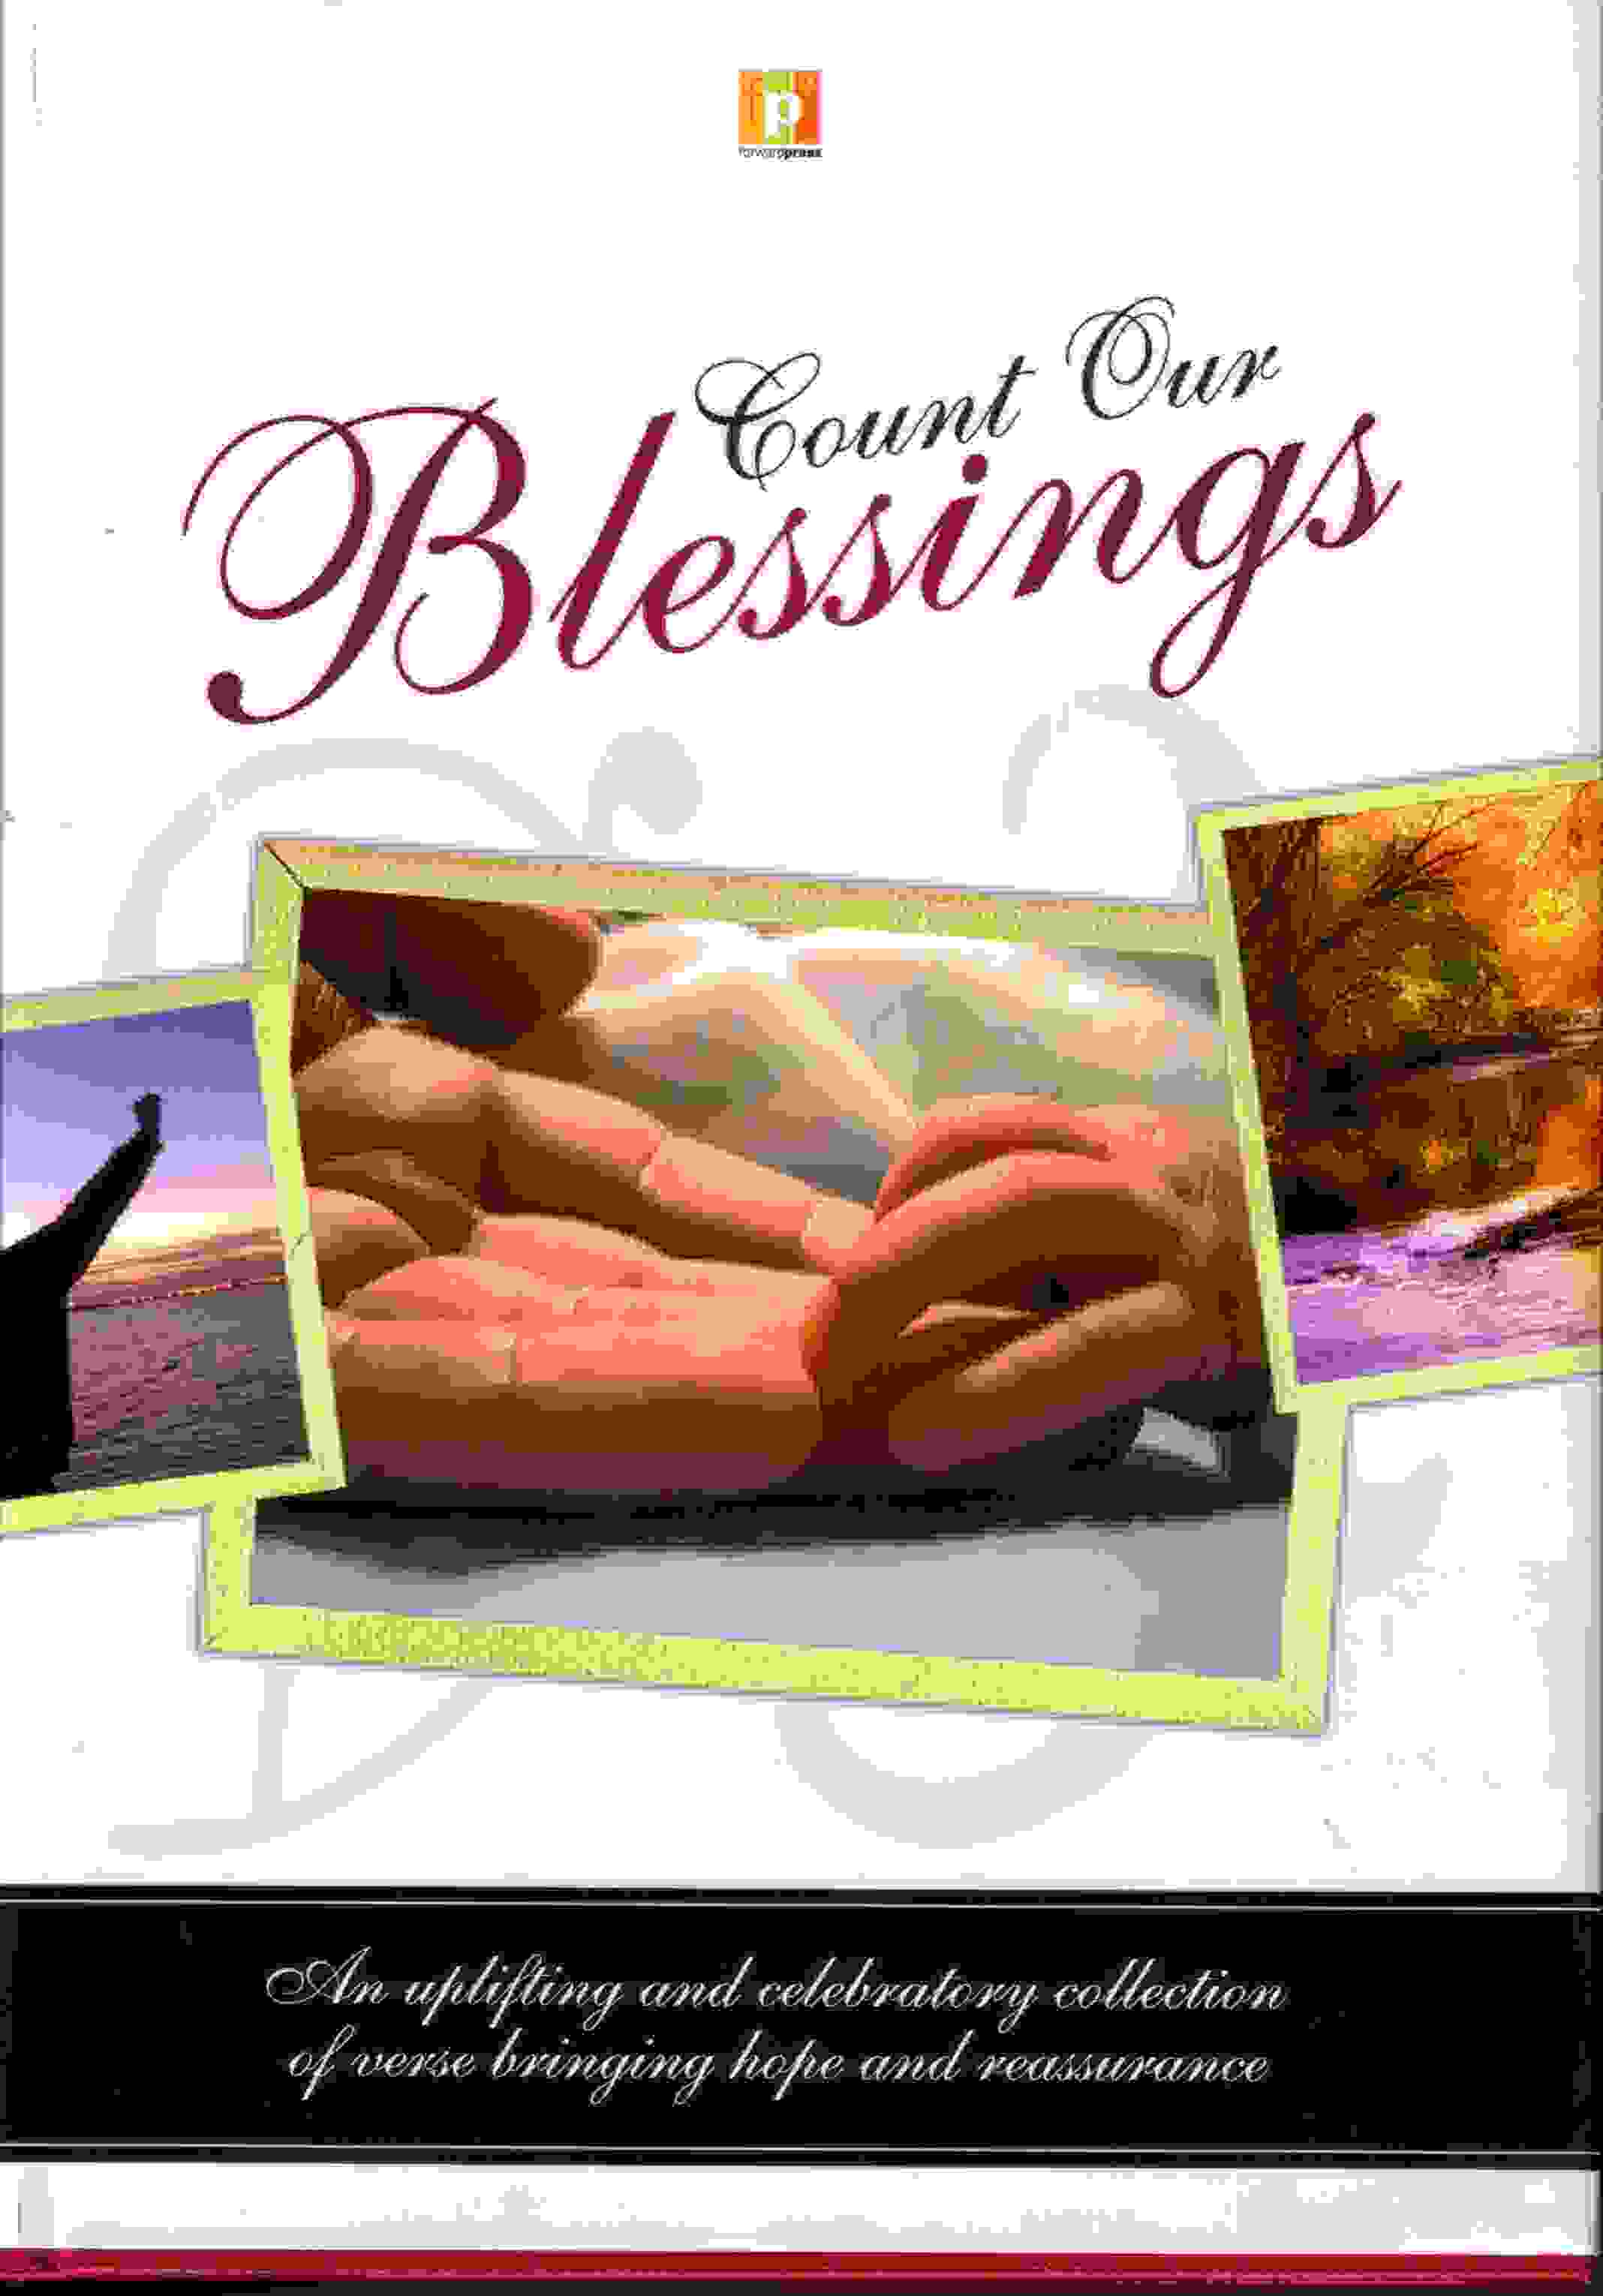 Poem 'Winning Smile'
COUNT OUR BLESSINGS
Forward Press Ltd
HB ISBN 978-1-84418-466-8 (June 2007)